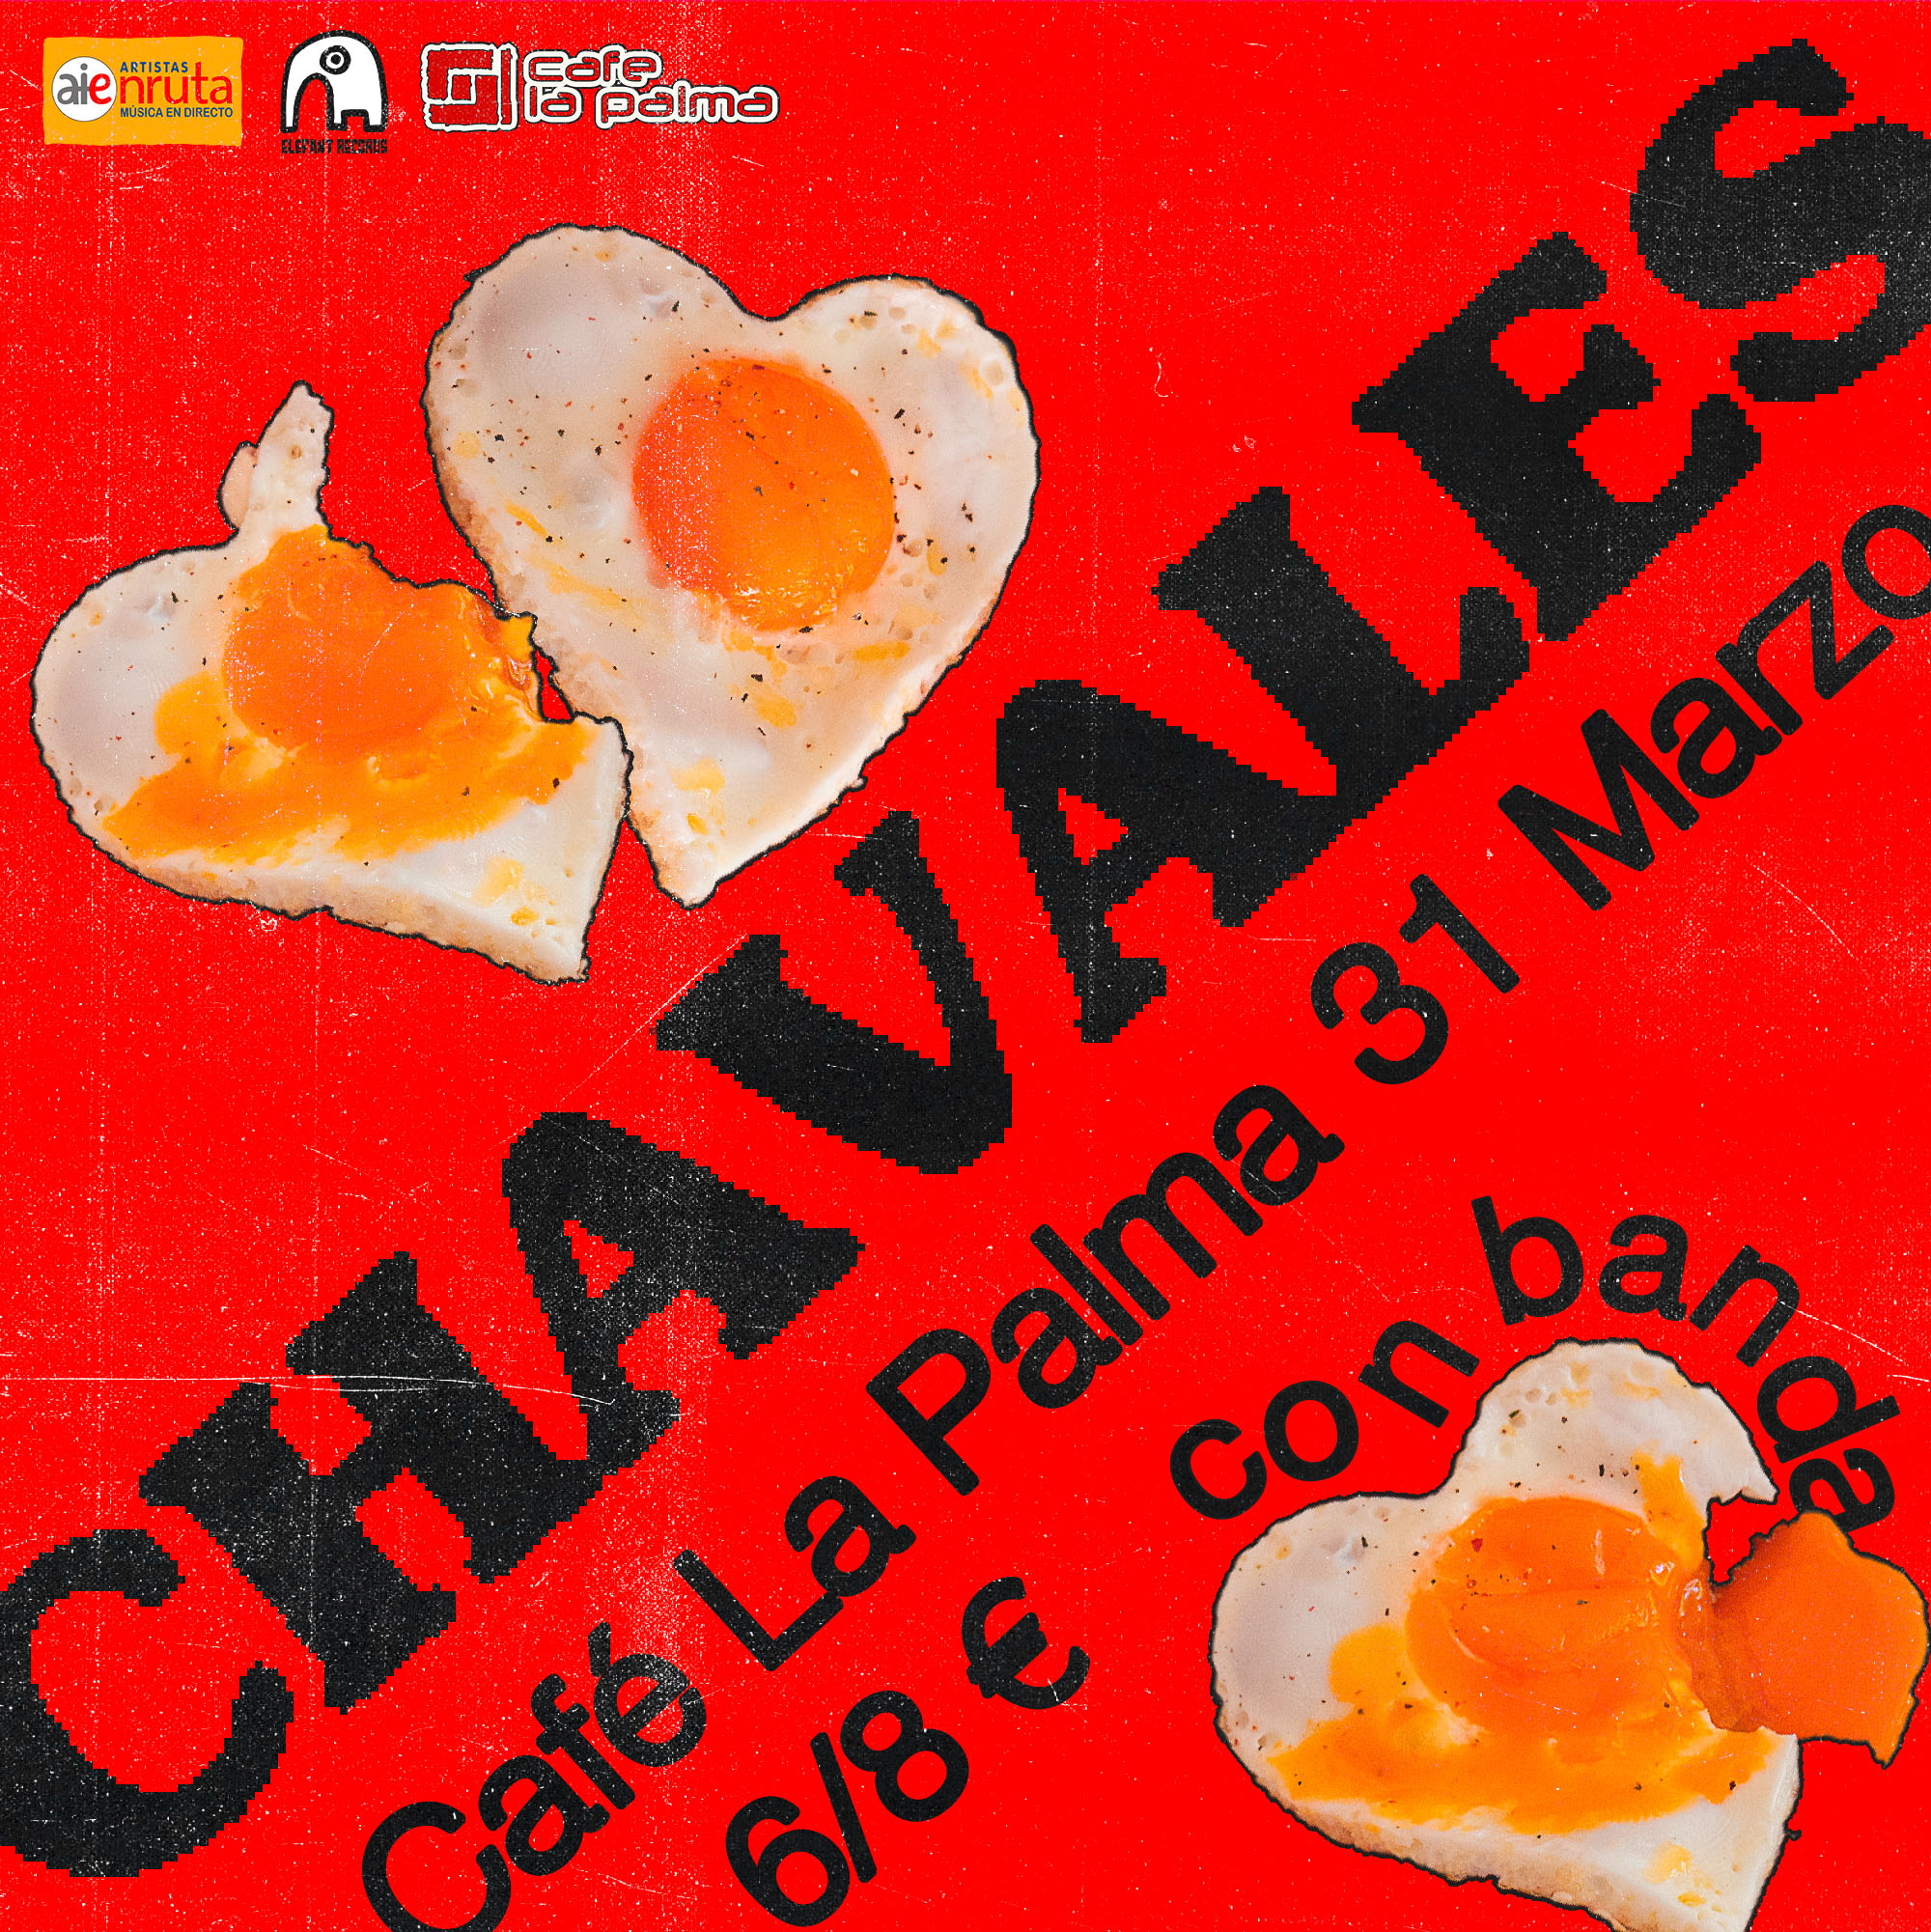 Chavales